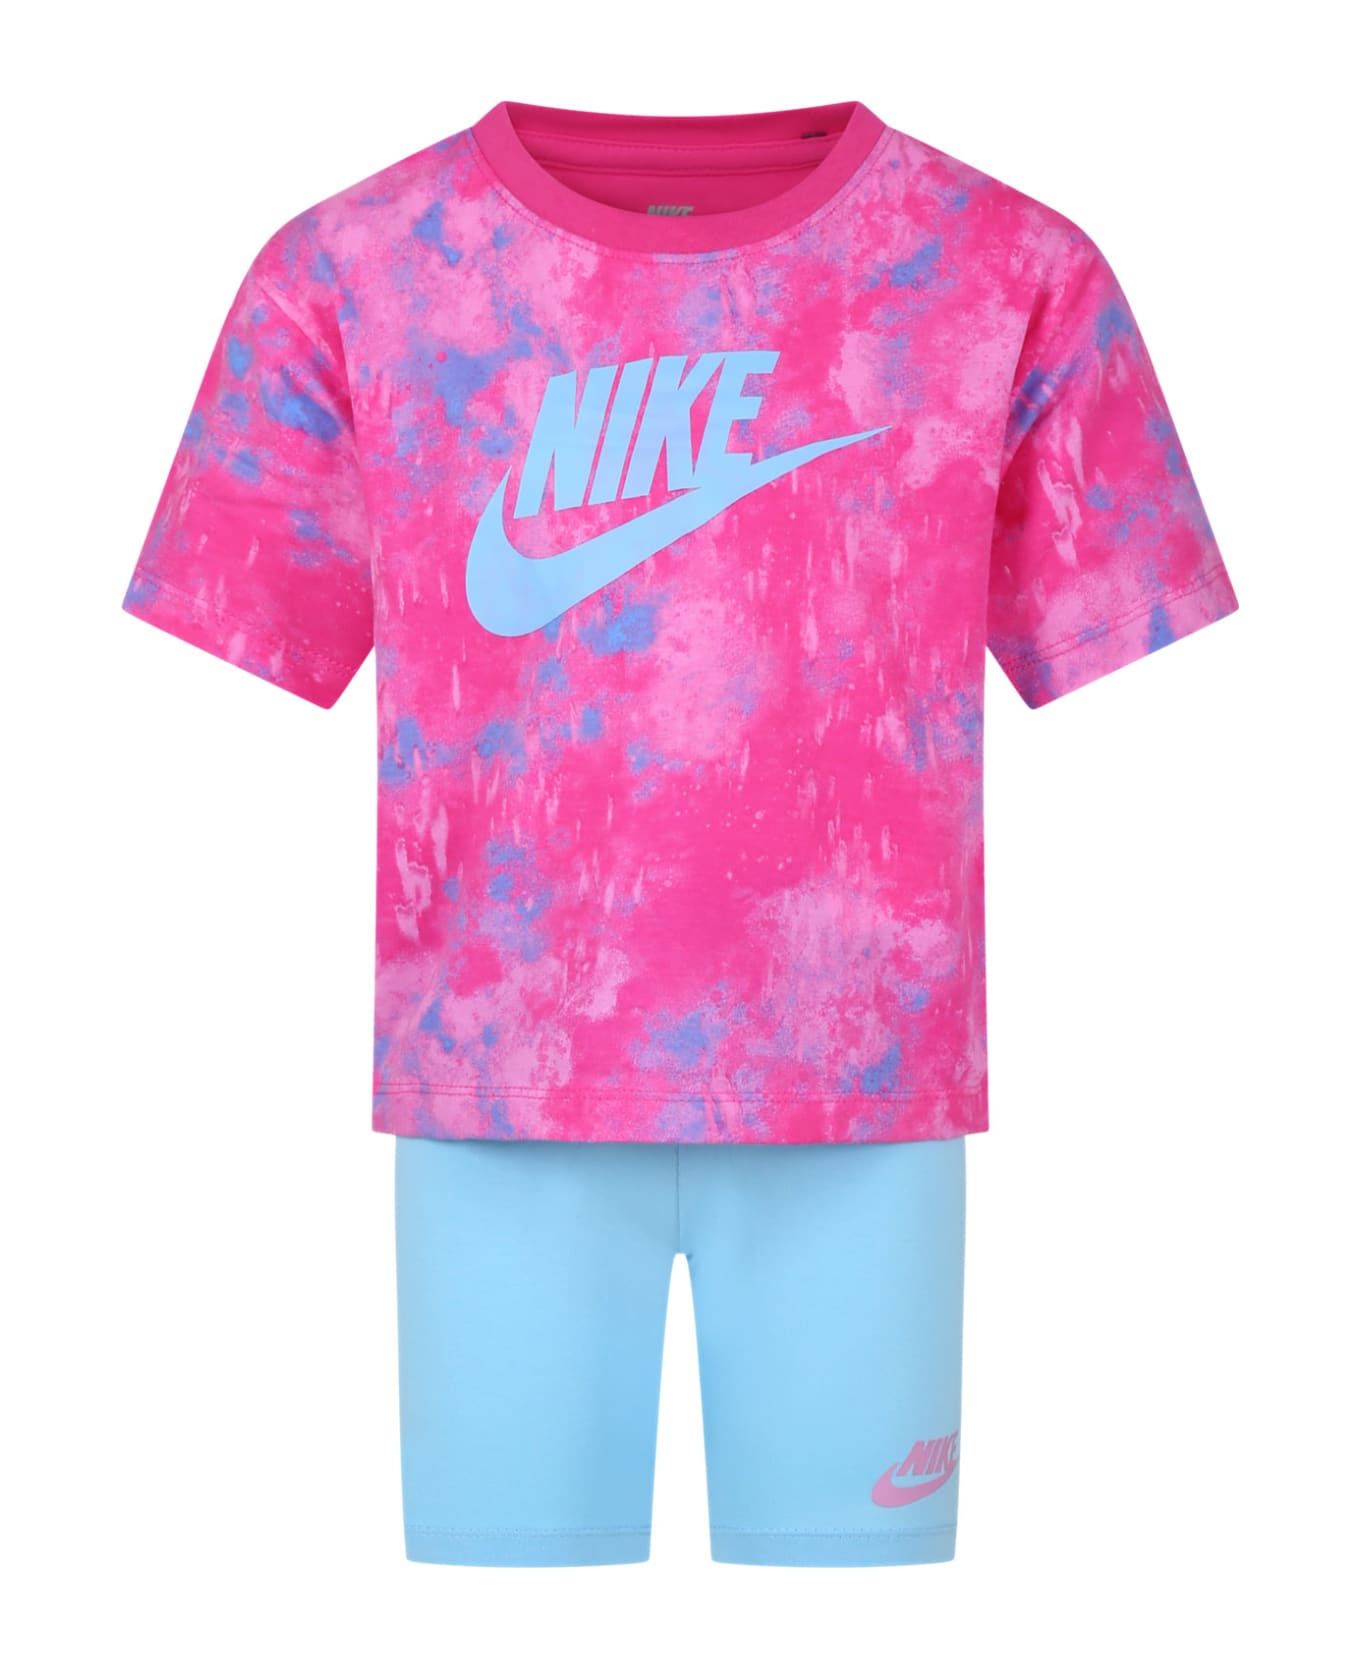 Nike Fuchsia T-shirt For Girl With Logo - Multicolor ジャンプスーツ